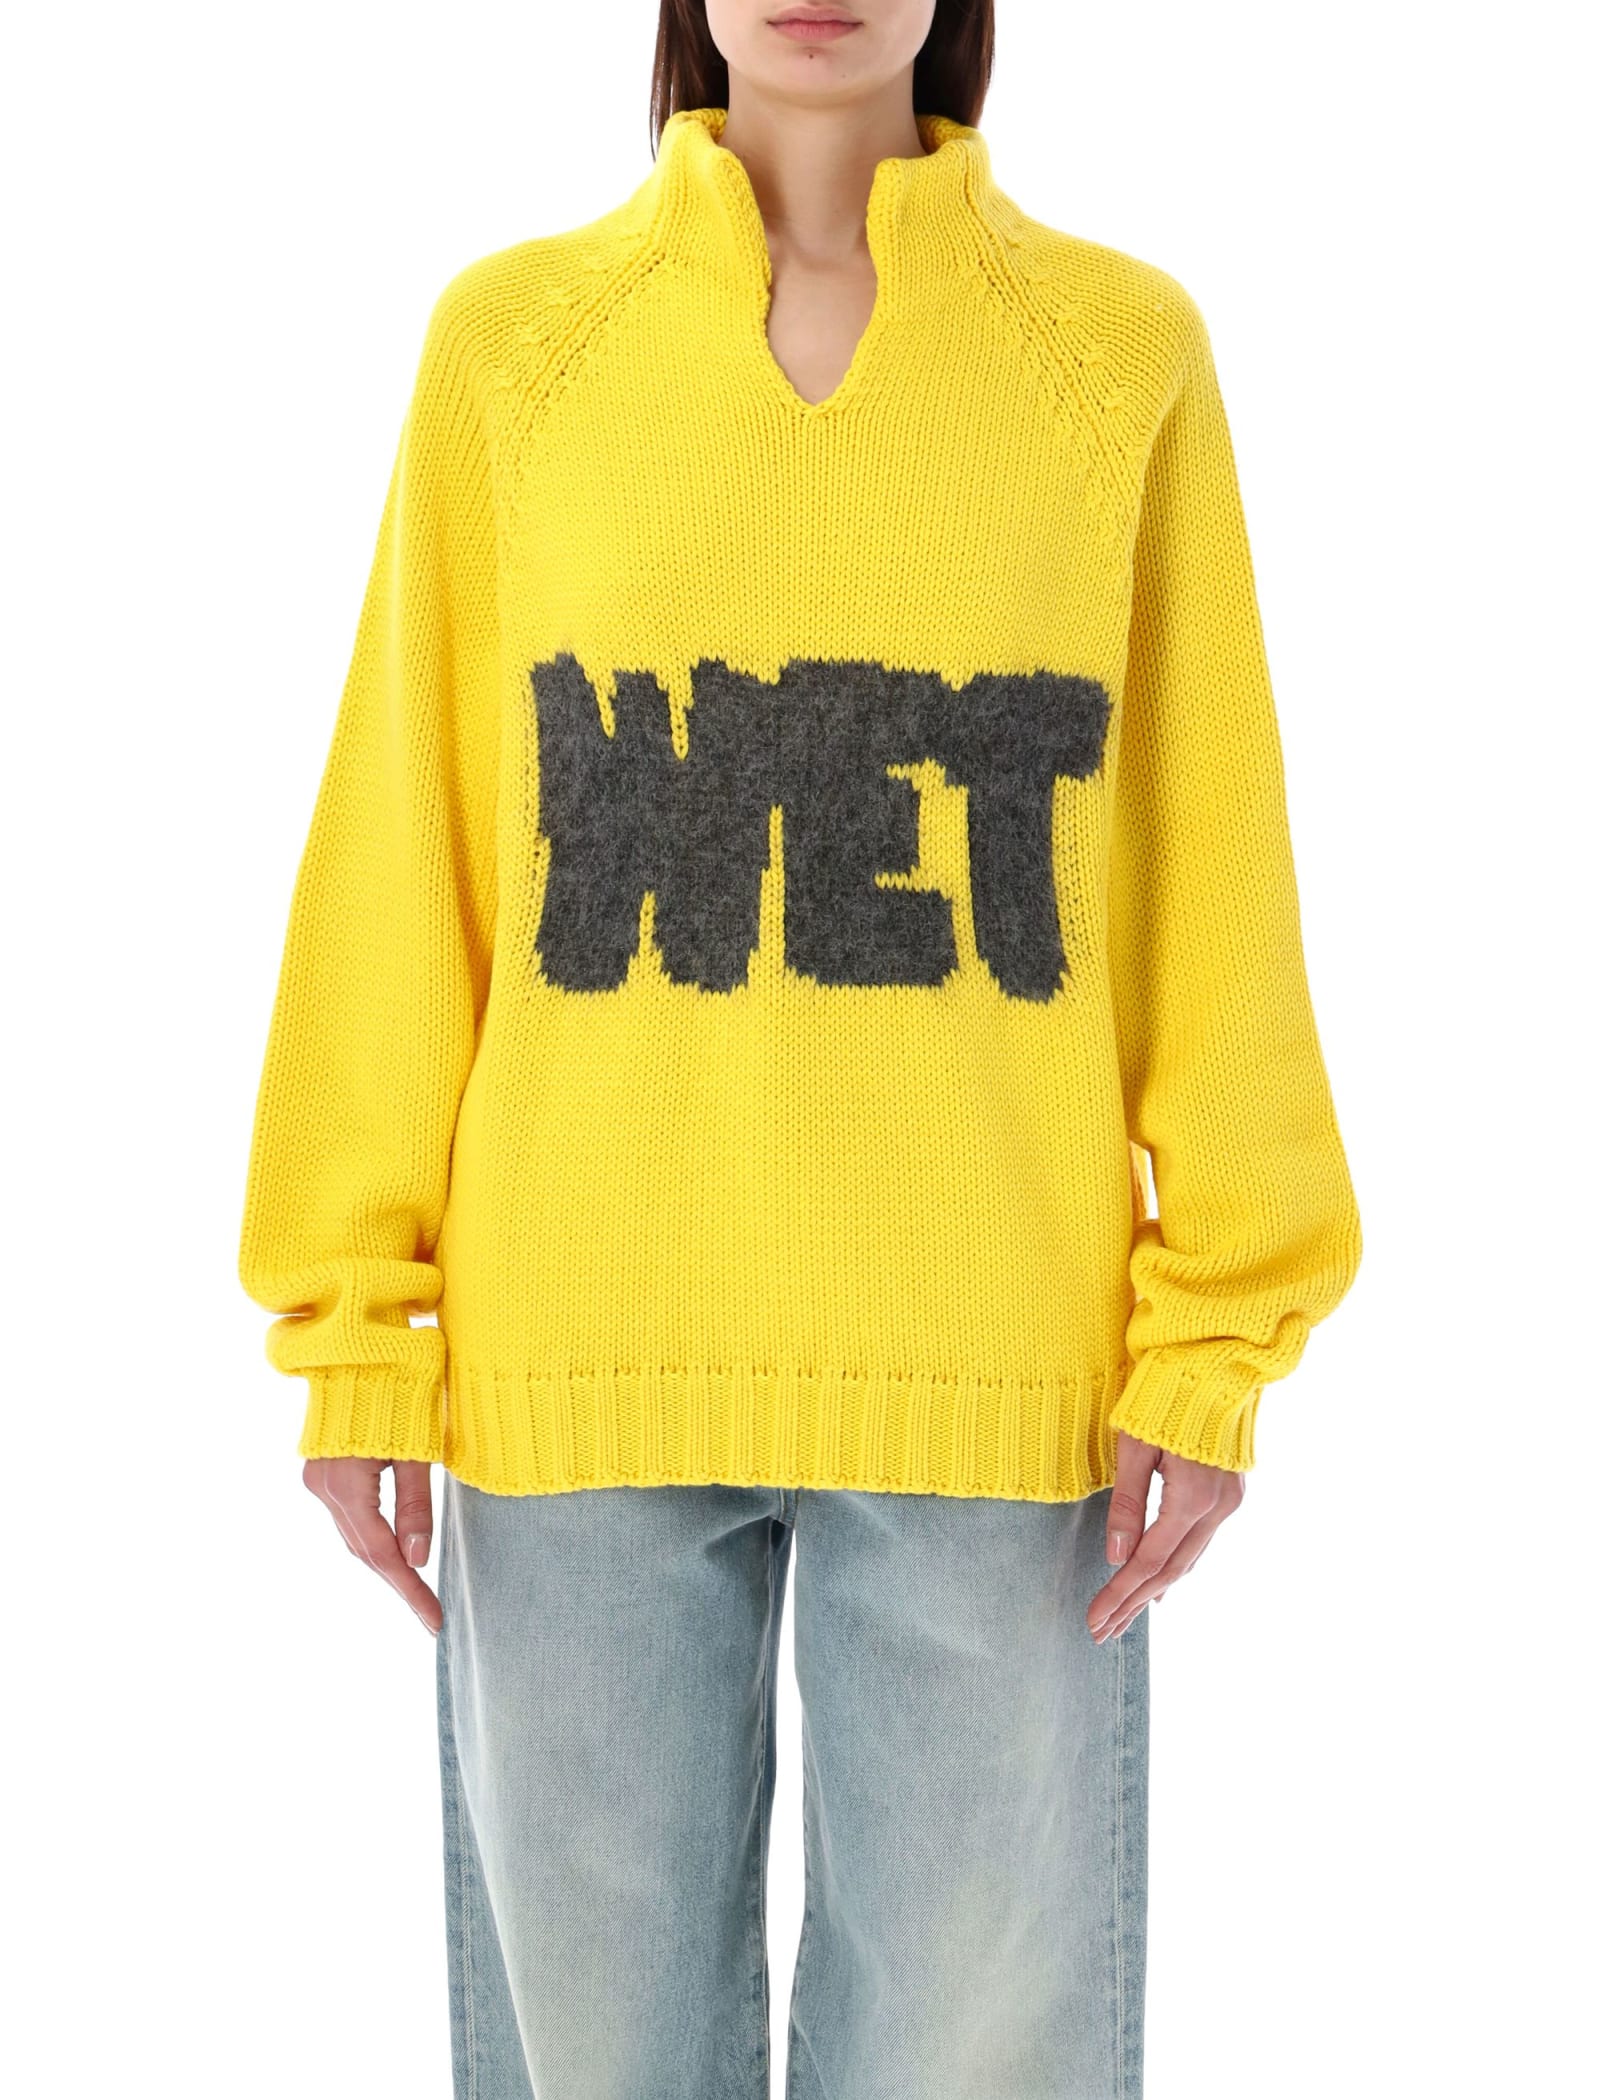 Wet Sweater